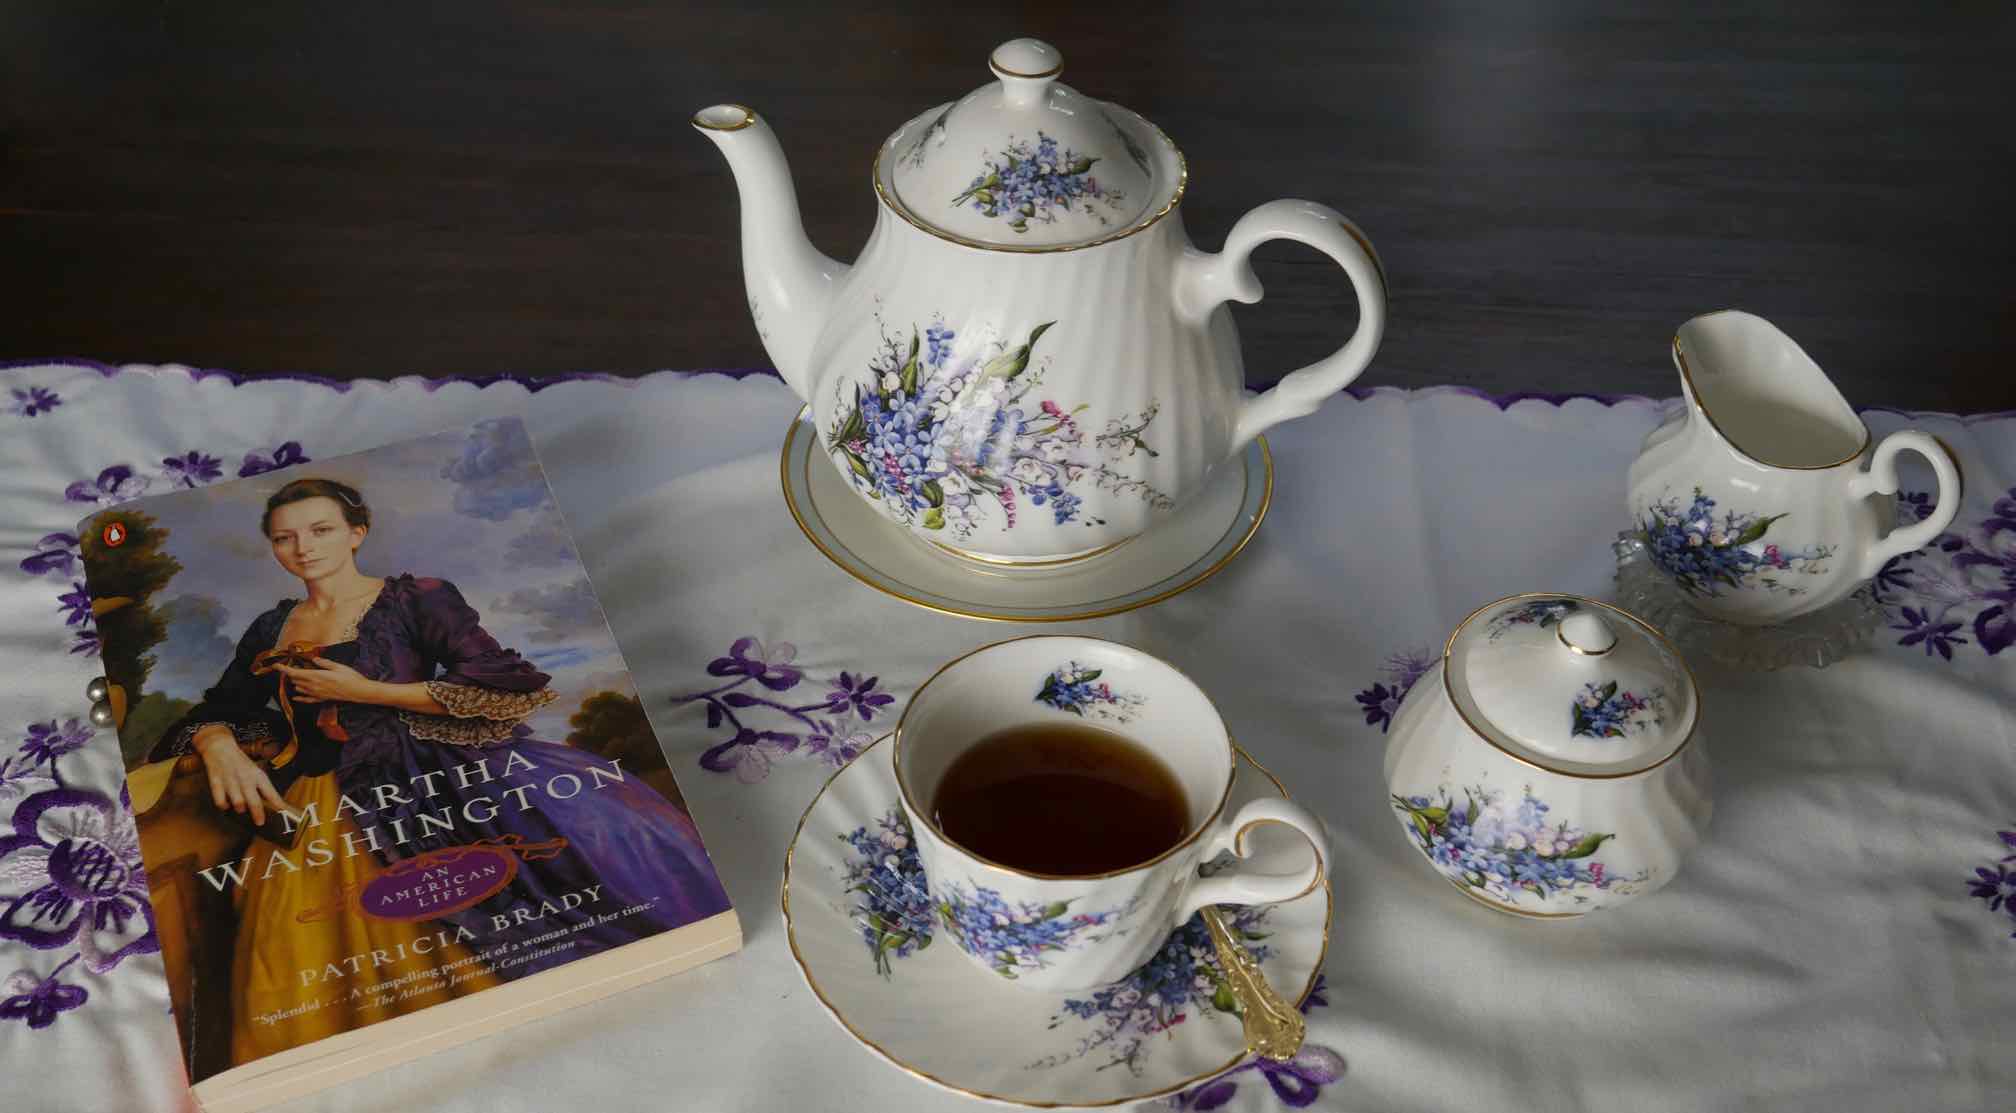 book Martha Washington on white flowered tea service